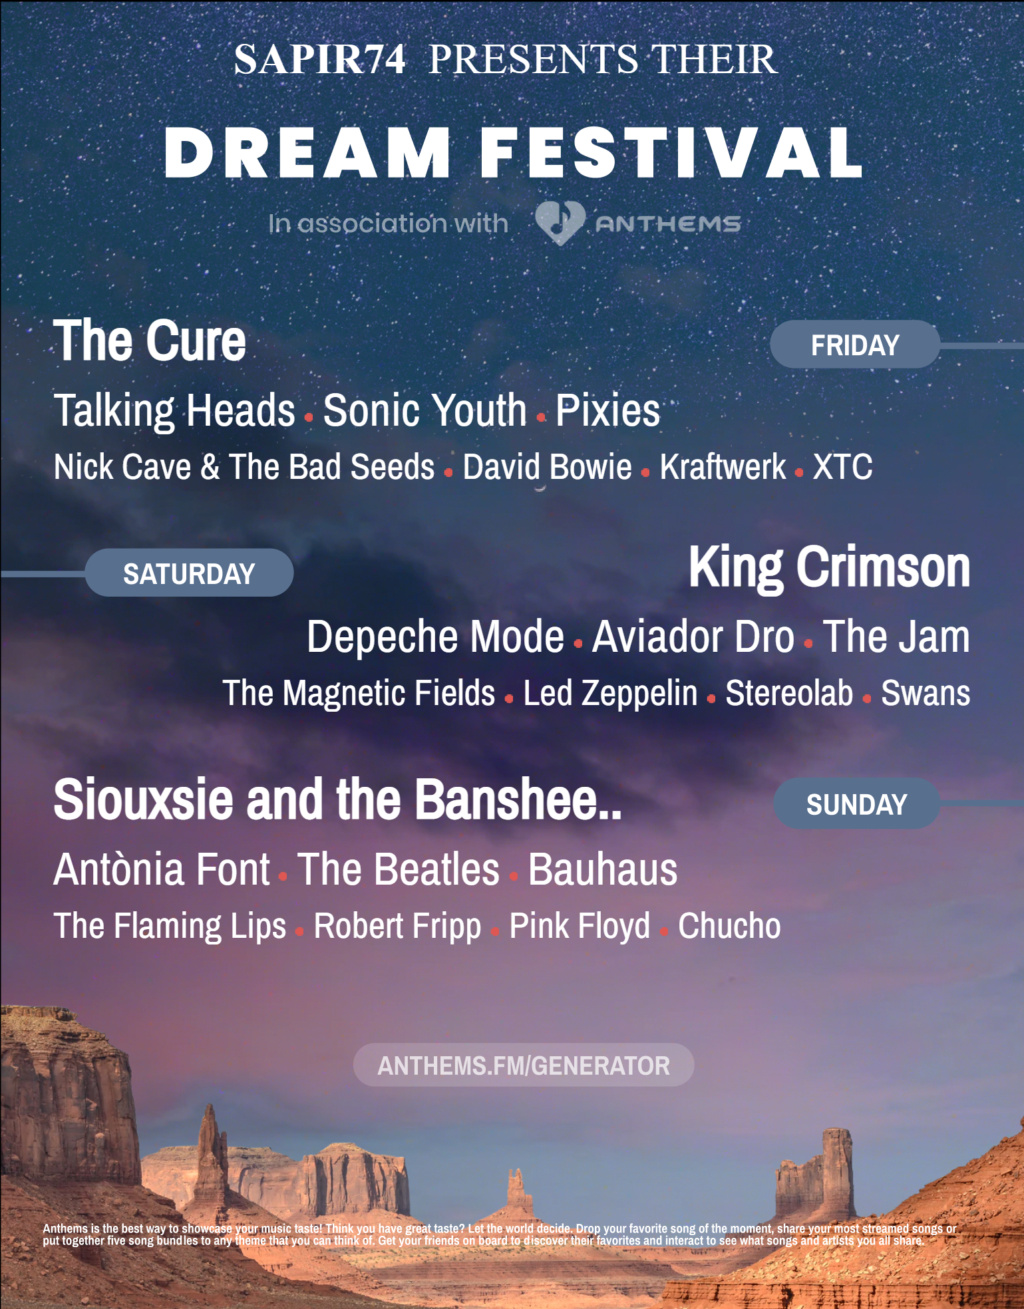 Dream Festival Descar11